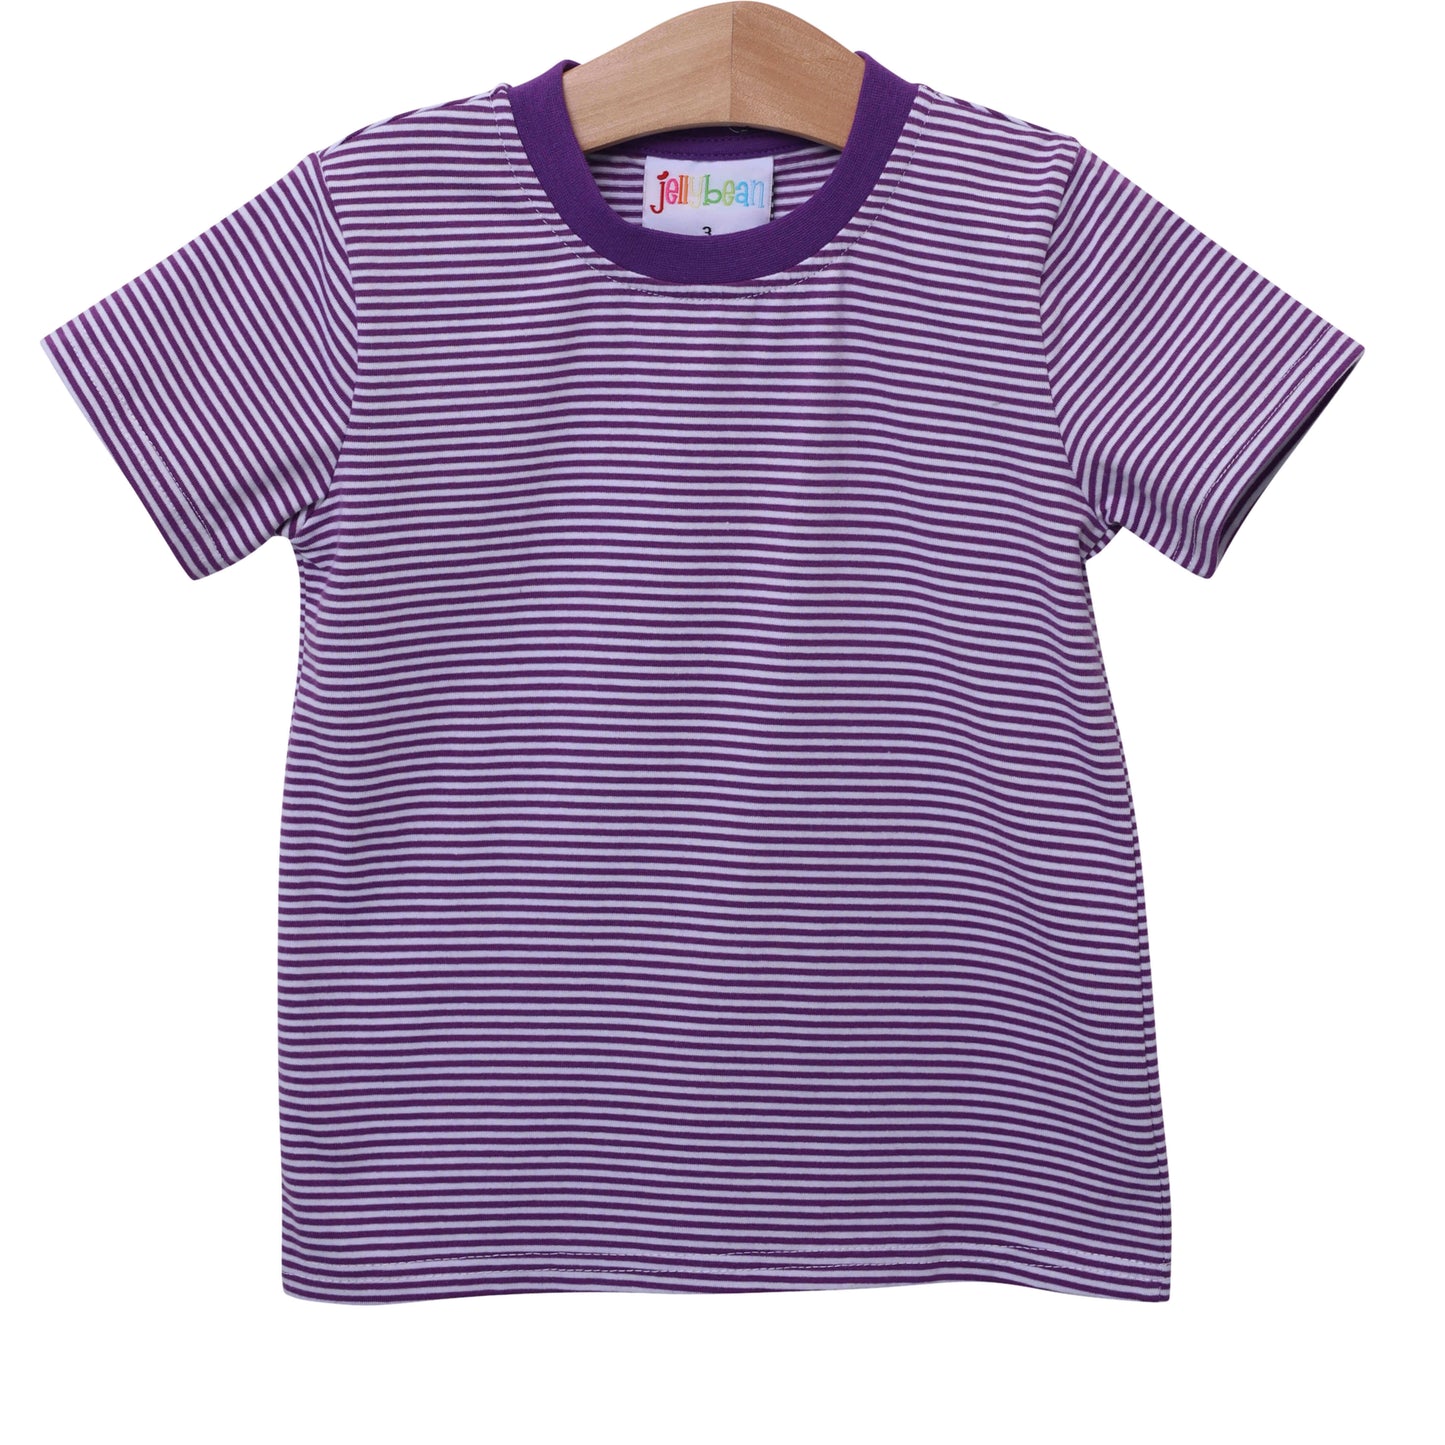 Boys Jellybean Tee - Purple Stripe